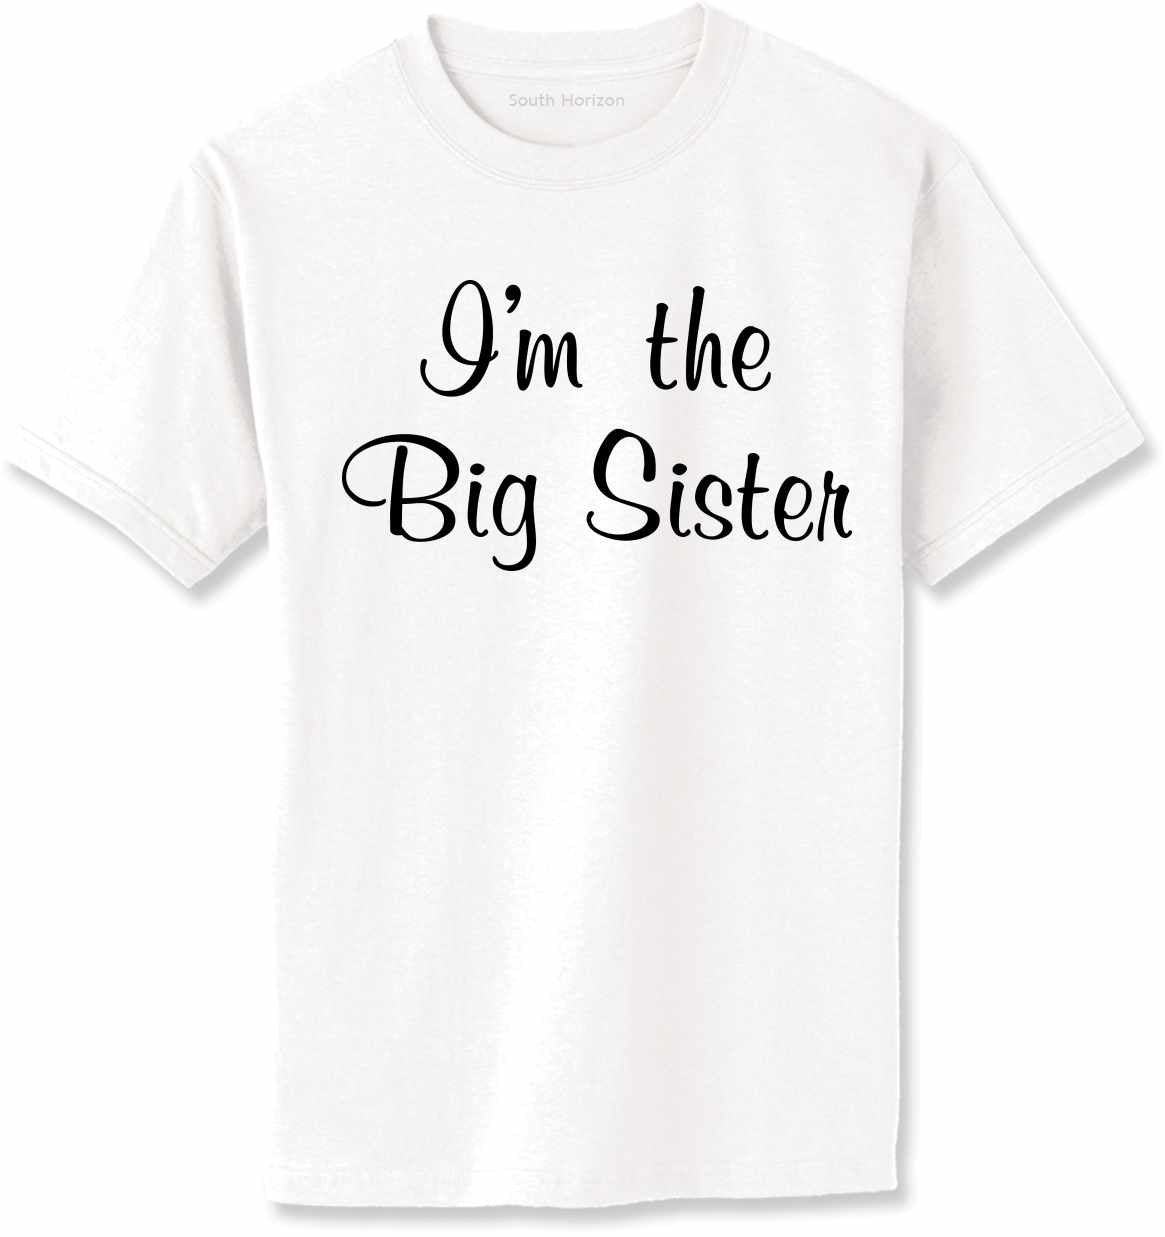 I'm the Big Sister on Adult T-Shirt (#1245-1)